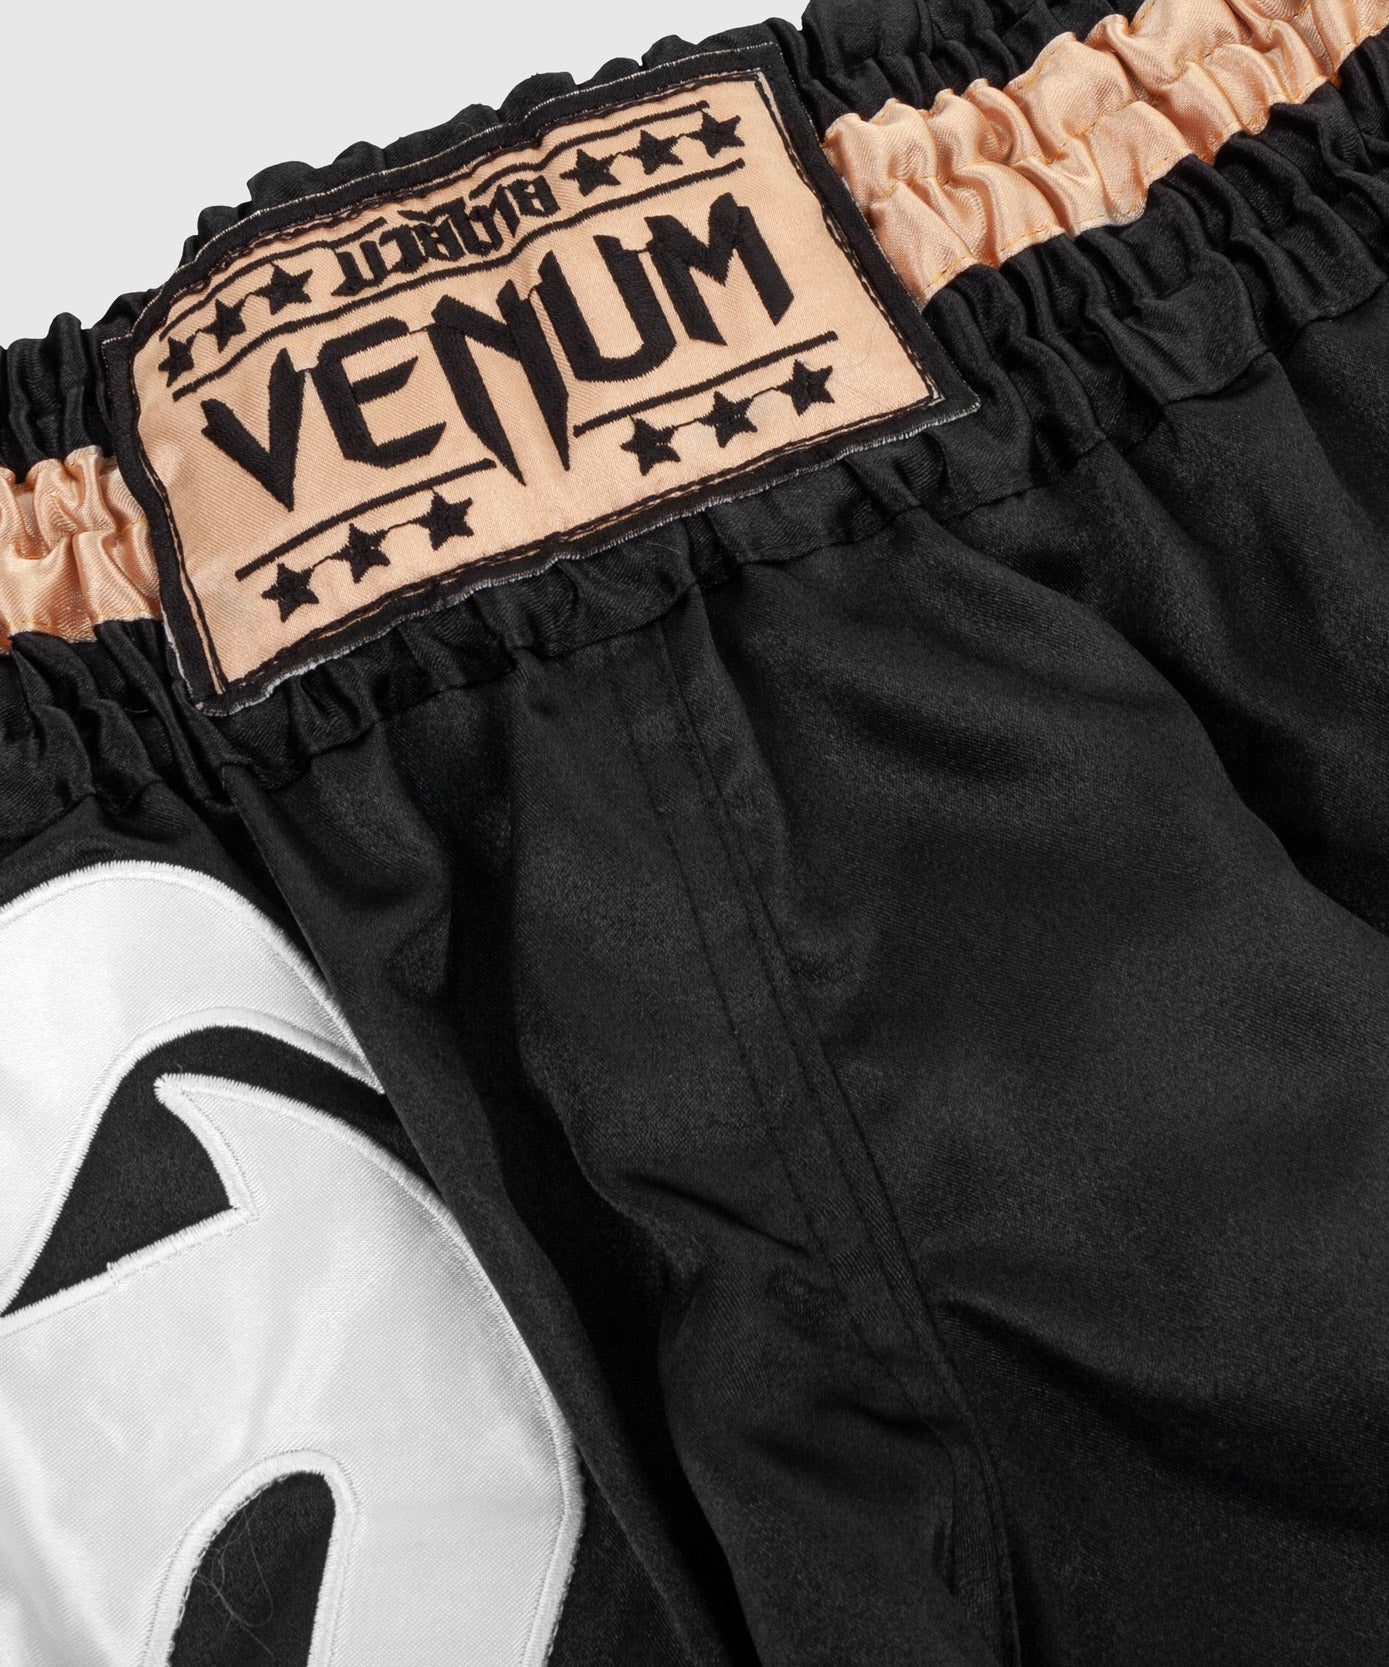 Pantalones Cortos de Muay Thai Venum Giant - Negro/Blanco/Oro – Venum España